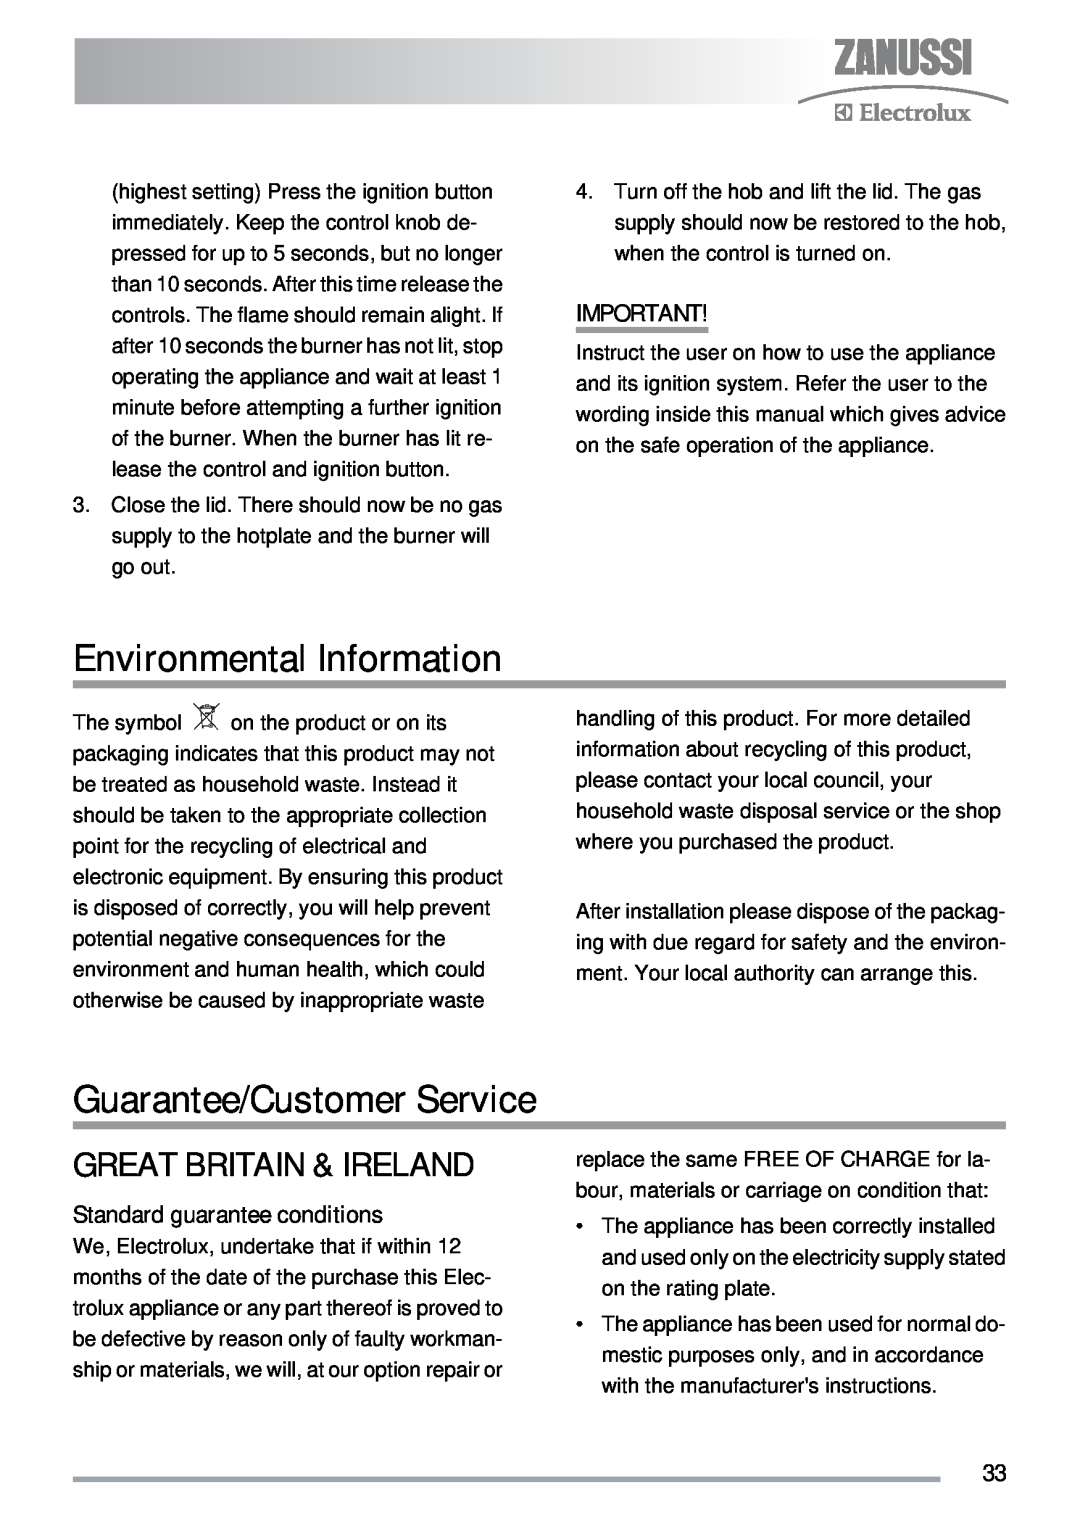 Zanussi ZKG5030 manual Environmental Information, Guarantee/Customer Service, Great Britain & Ireland 